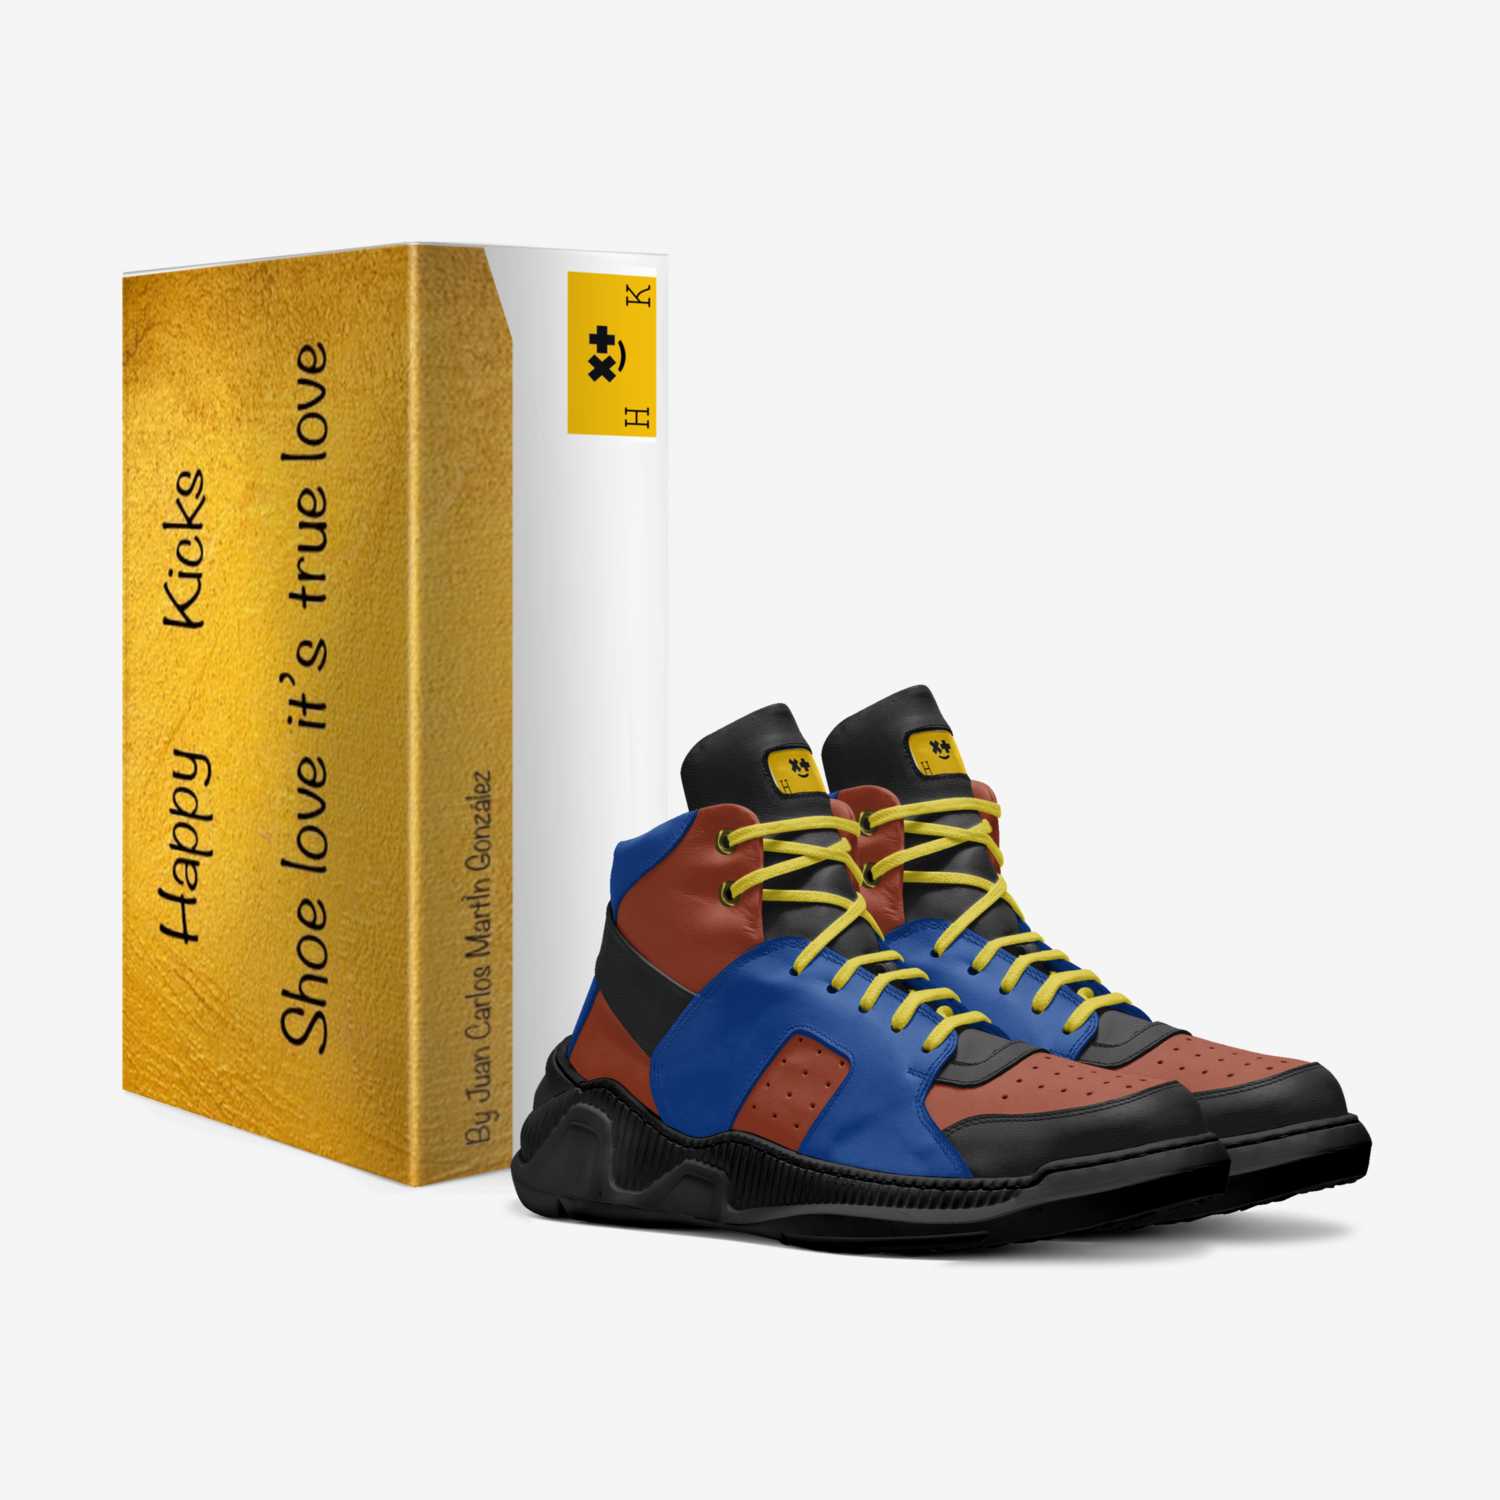 HappyKicks custom made in Italy shoes by Juan Carlos Martin | Box view